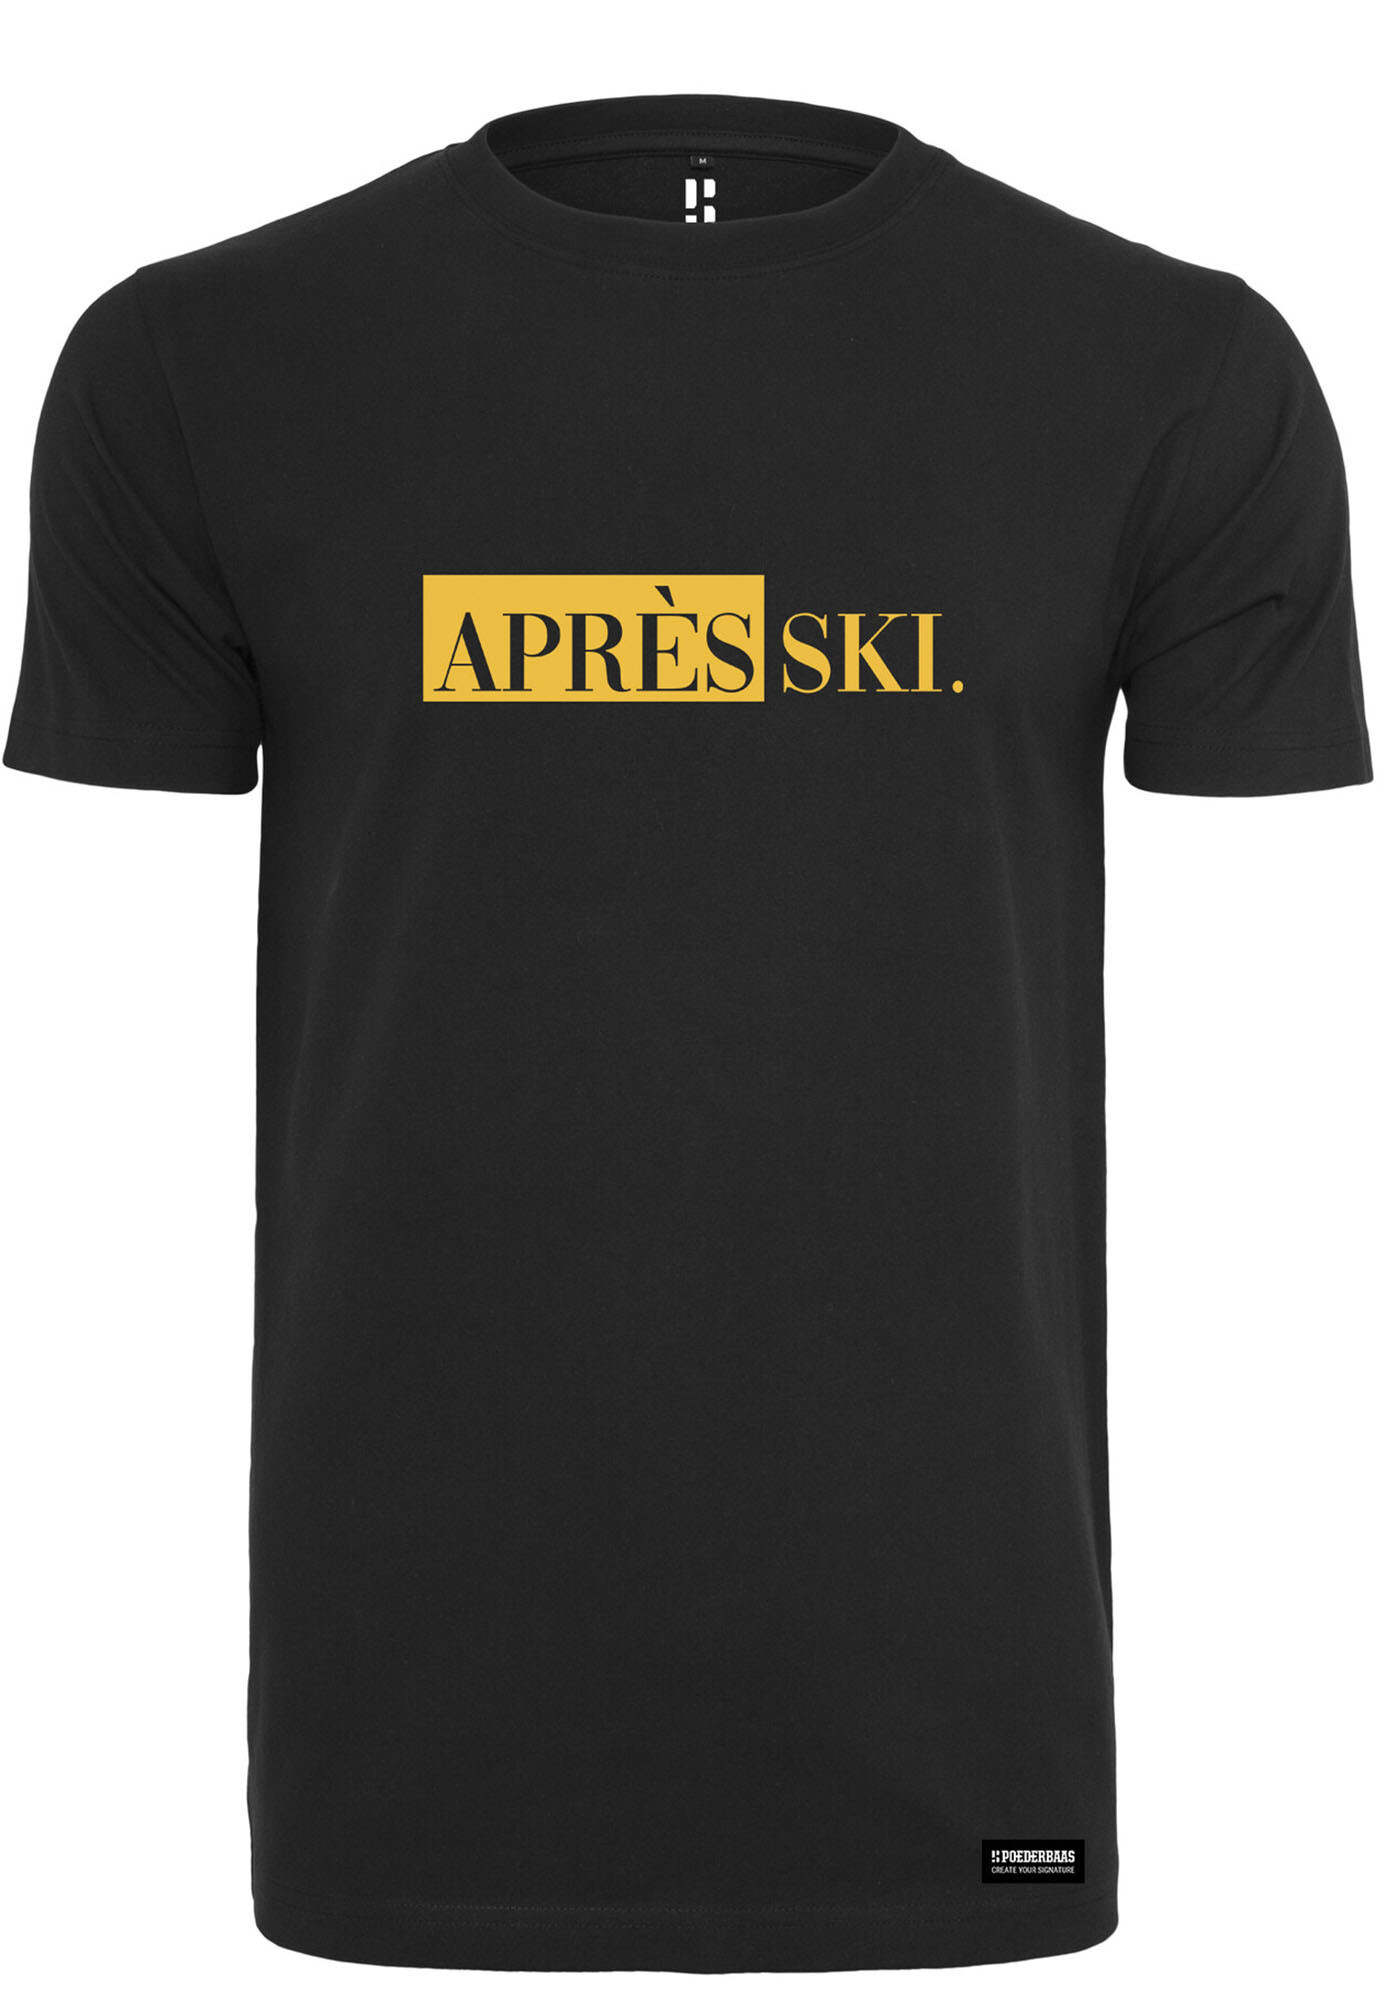 Zwarte APRES SKI. t-shirt met gele opdruk